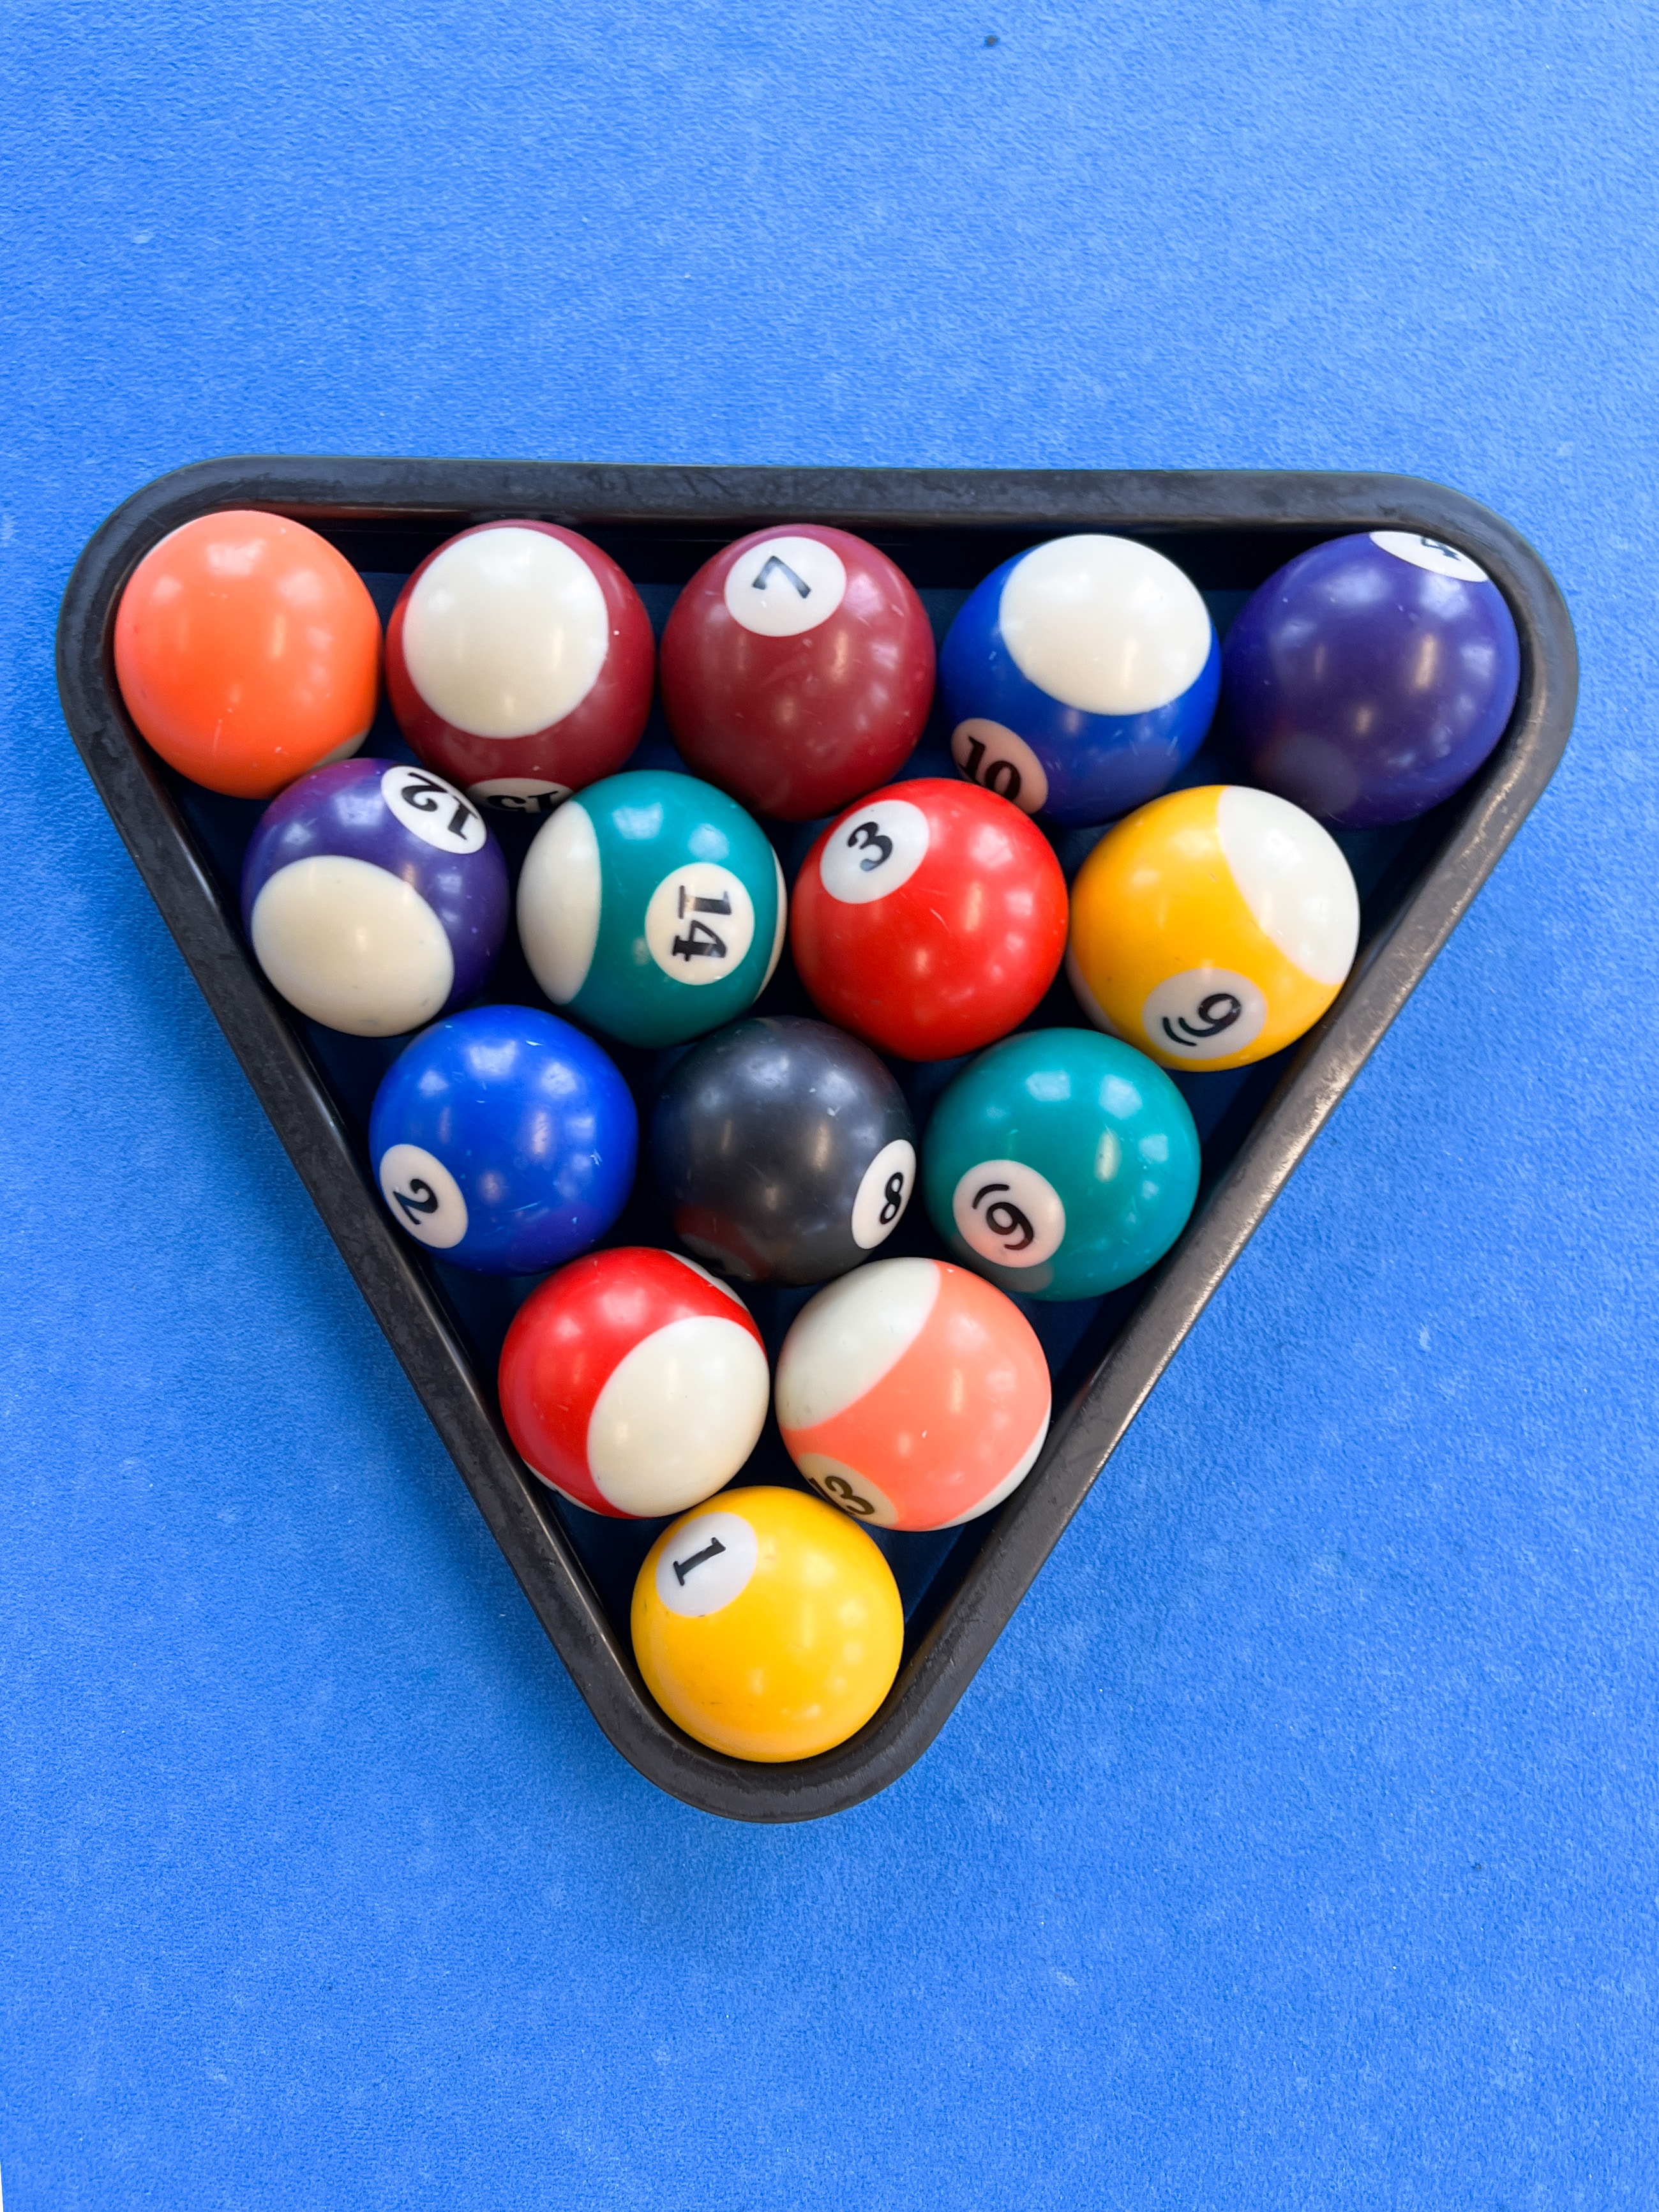 A racked set of pool balls